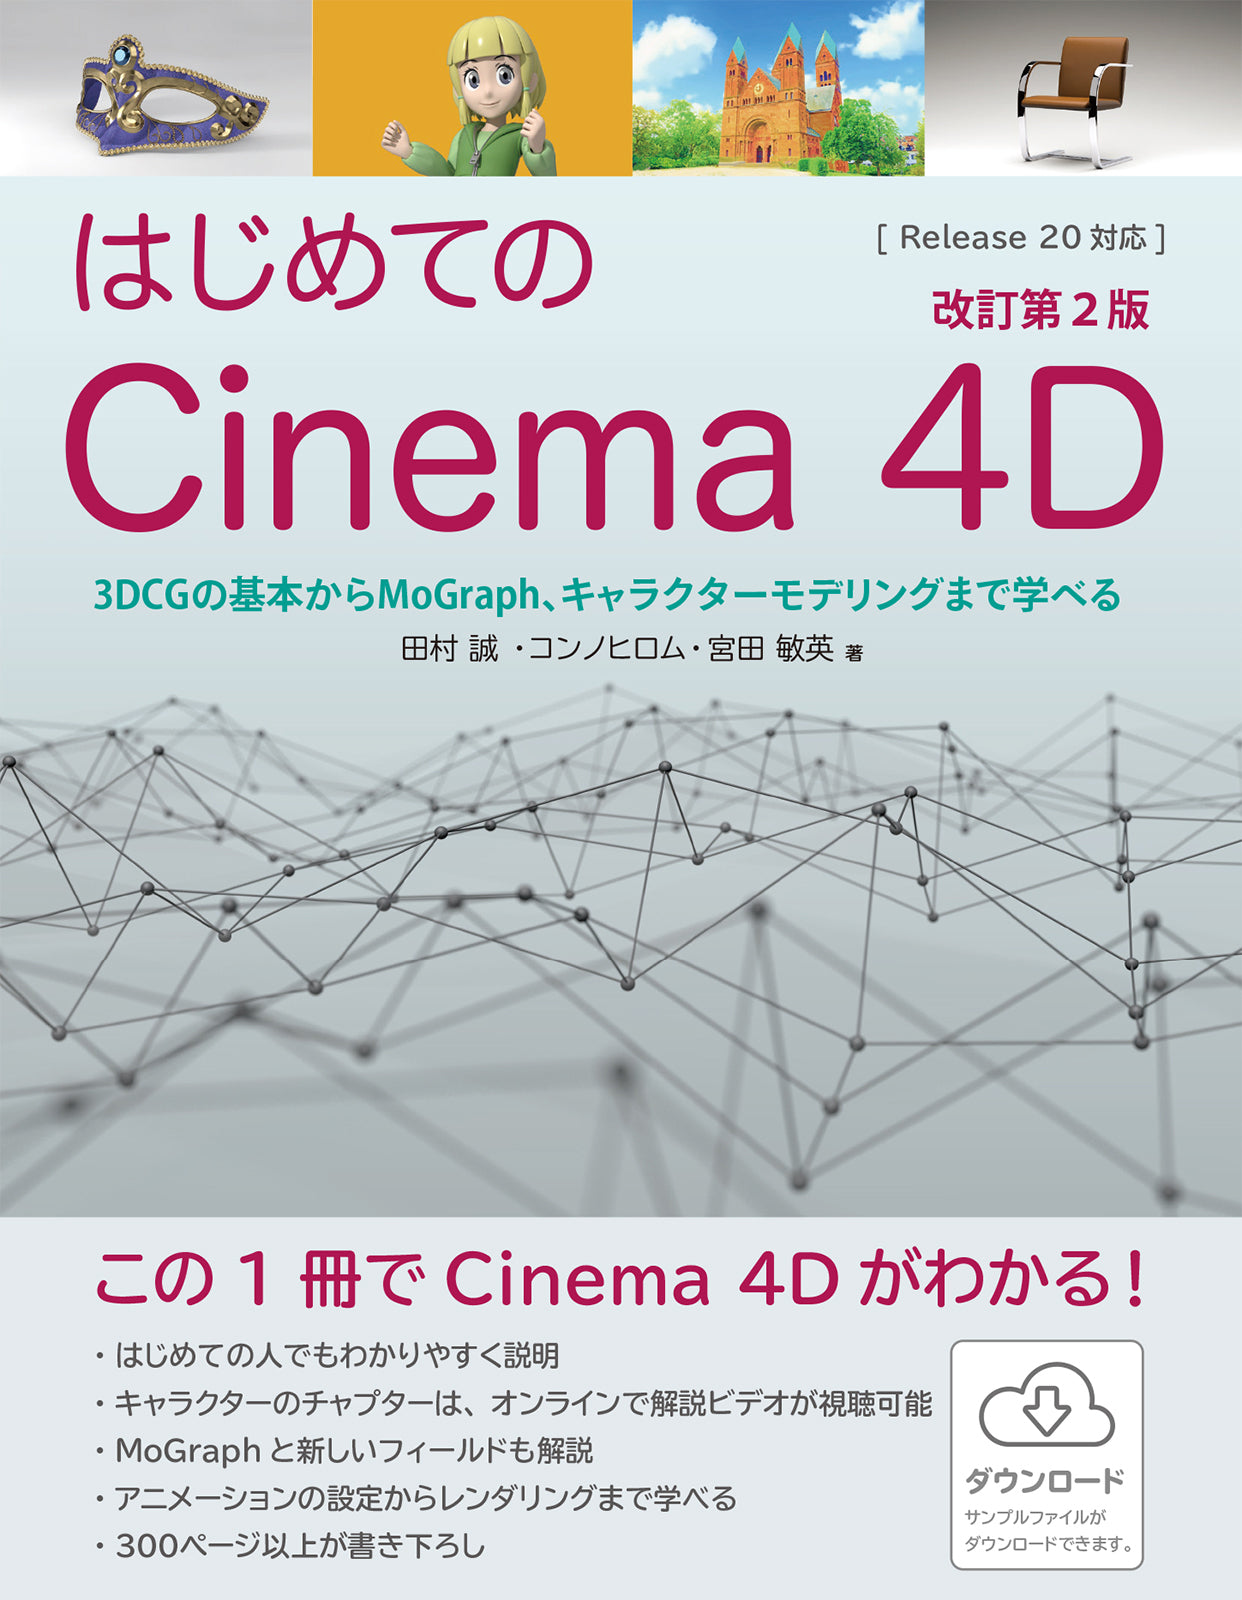 CINEMA 4D建築CGテクニック